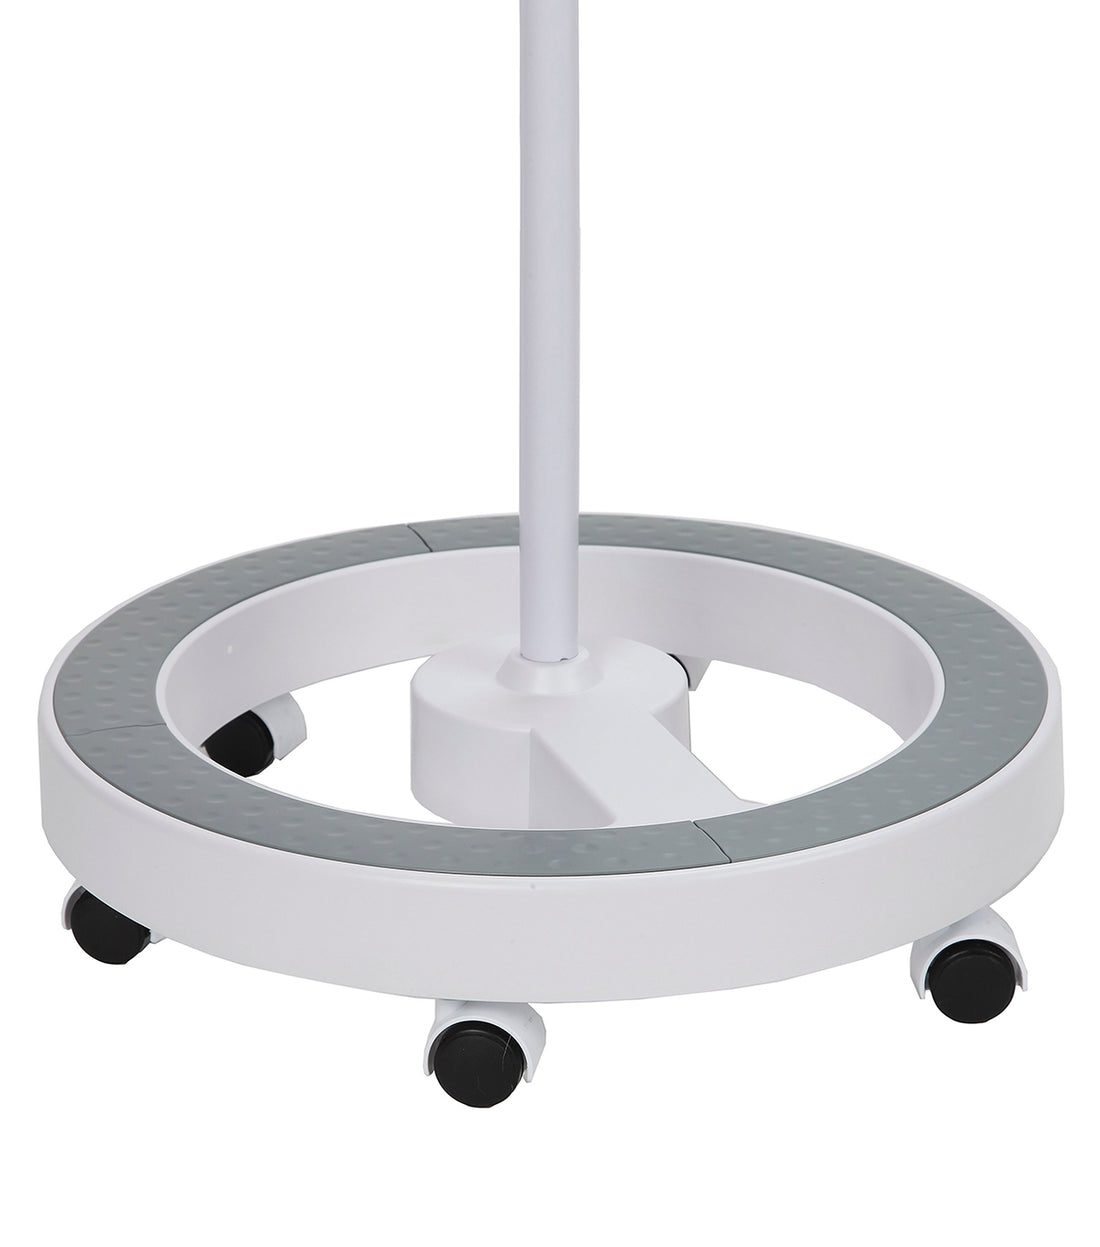 LANCOSC Magniyfing Floor lamp with 5 Wheels Rolling Base for